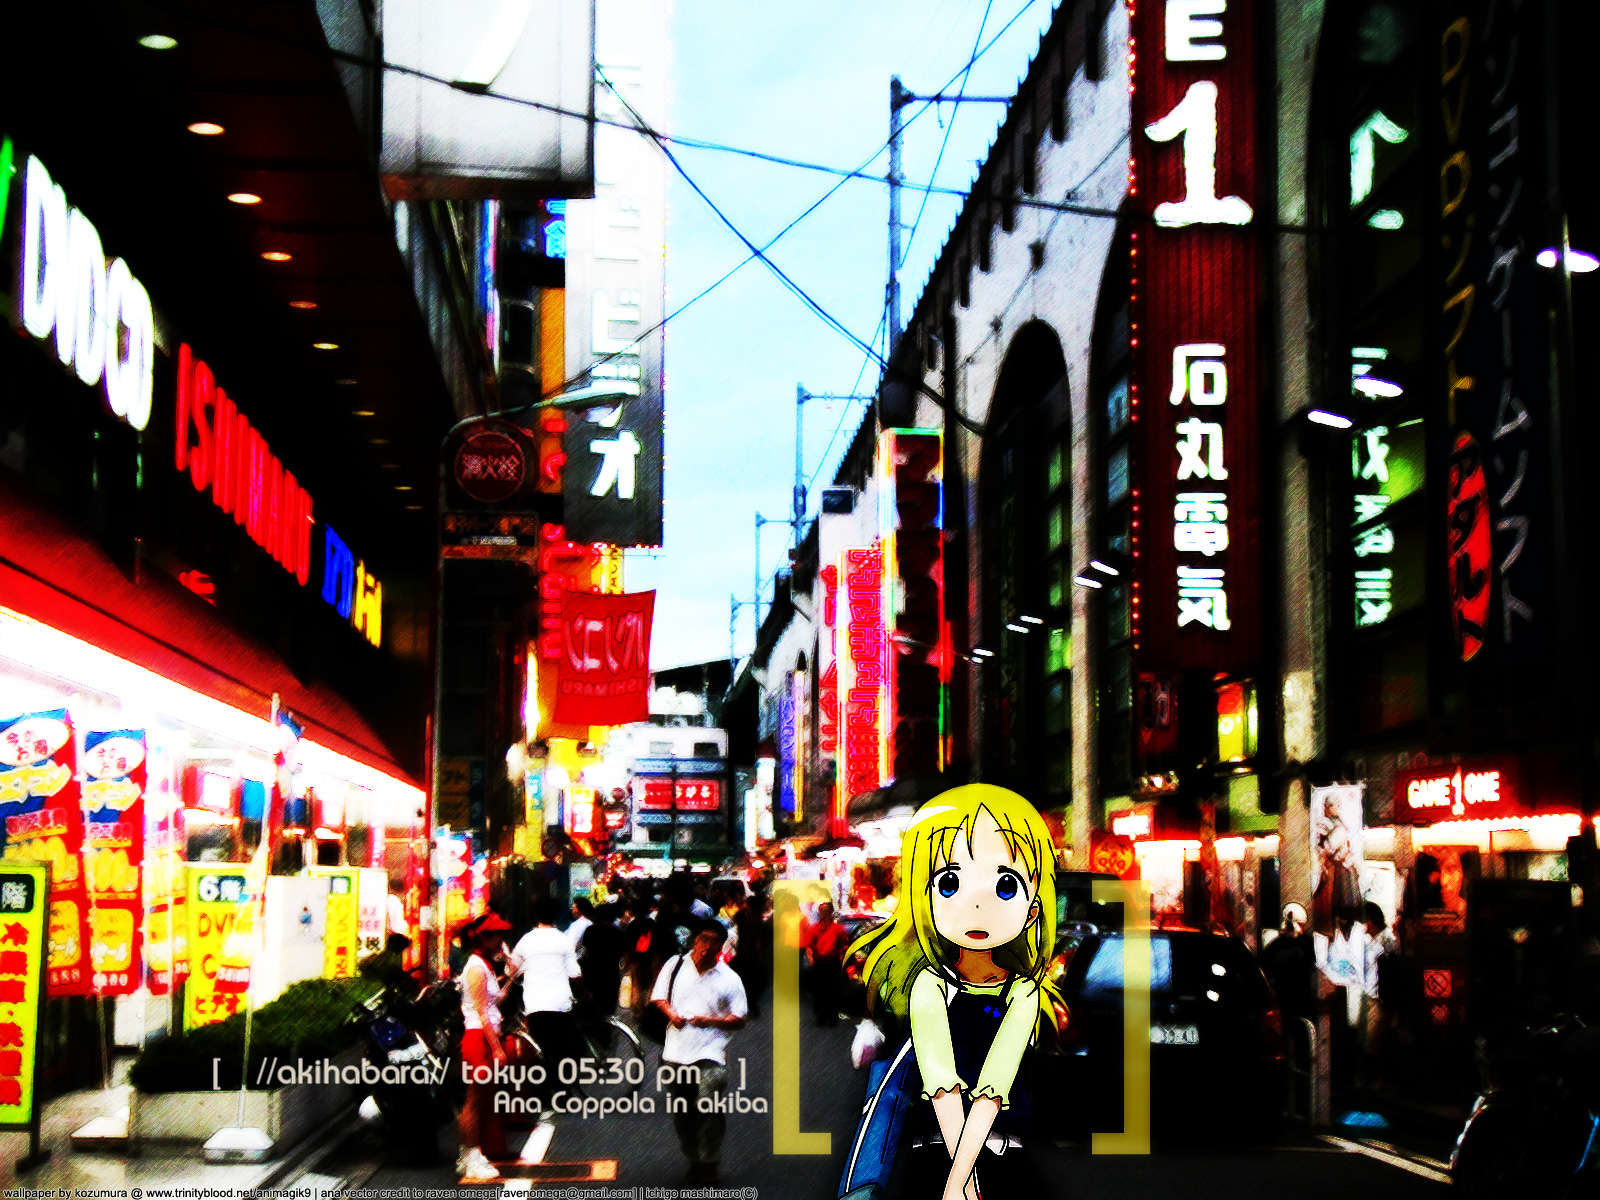 Download hd 1600x1200 Ichigo Mashimaro PC background ID:126878 for free